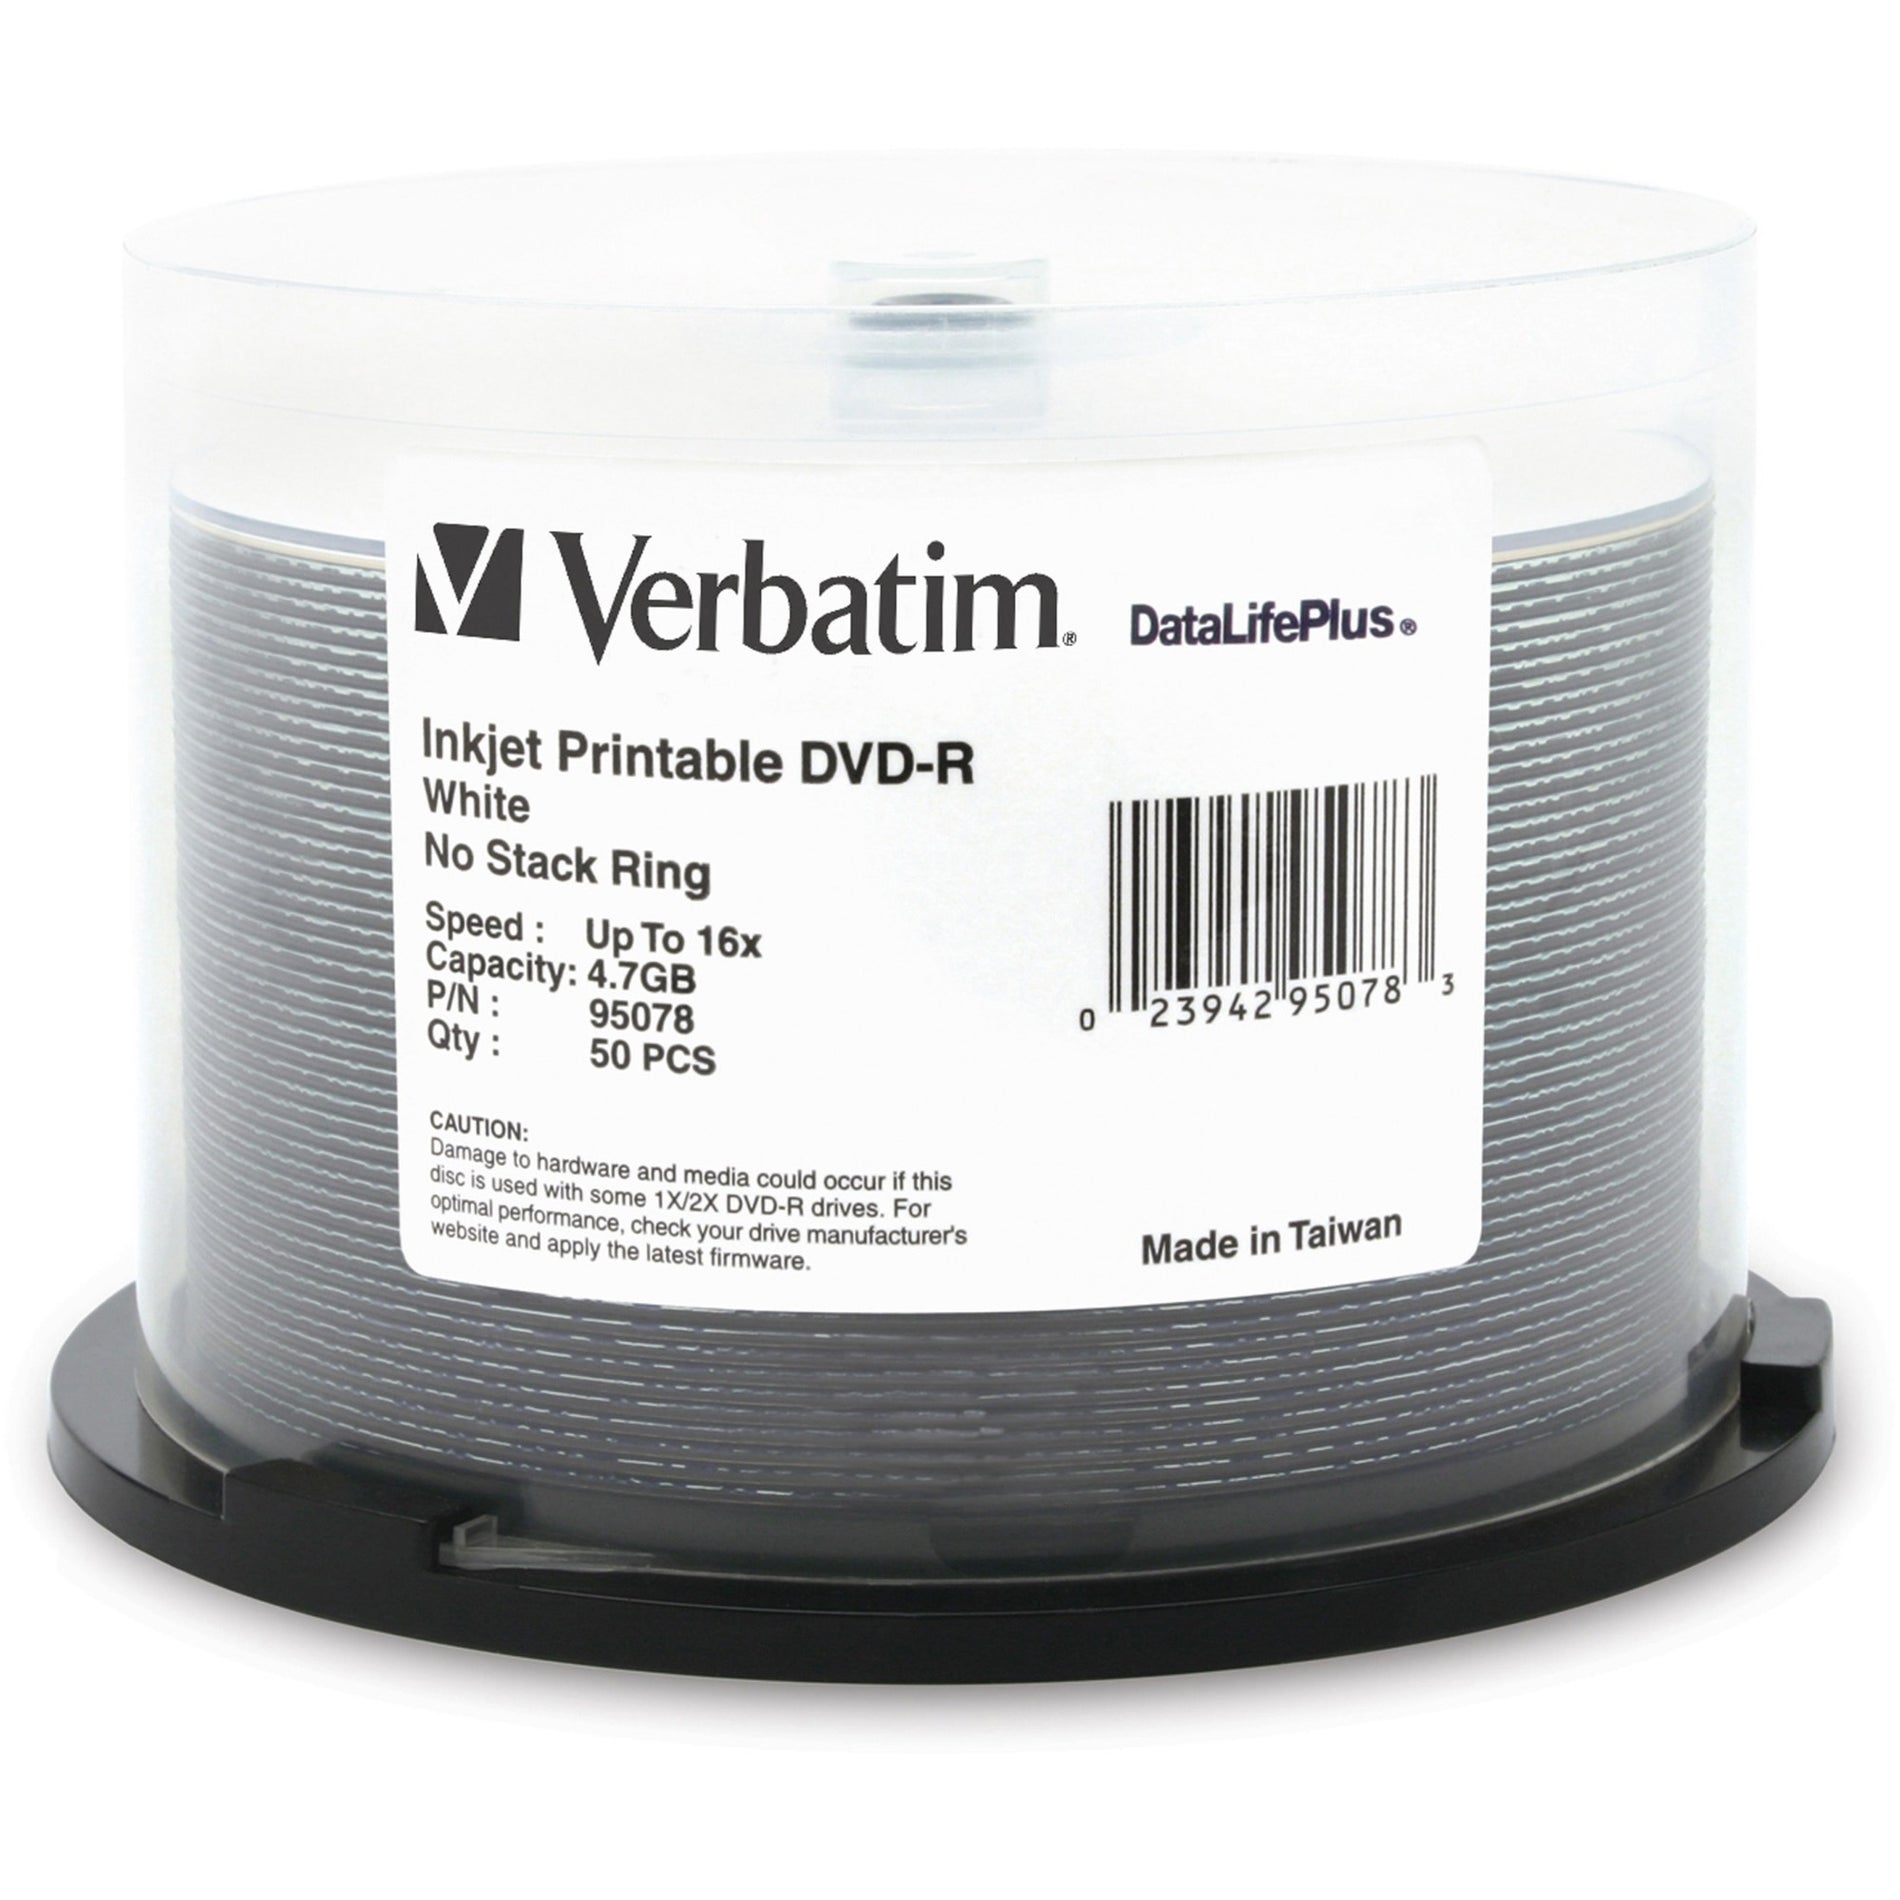 Verbatim 95078 DVD-R 4.7GB 16x DataLifePlus White Inkjet Printable 50 Pack Spindle, Lifetime Warranty